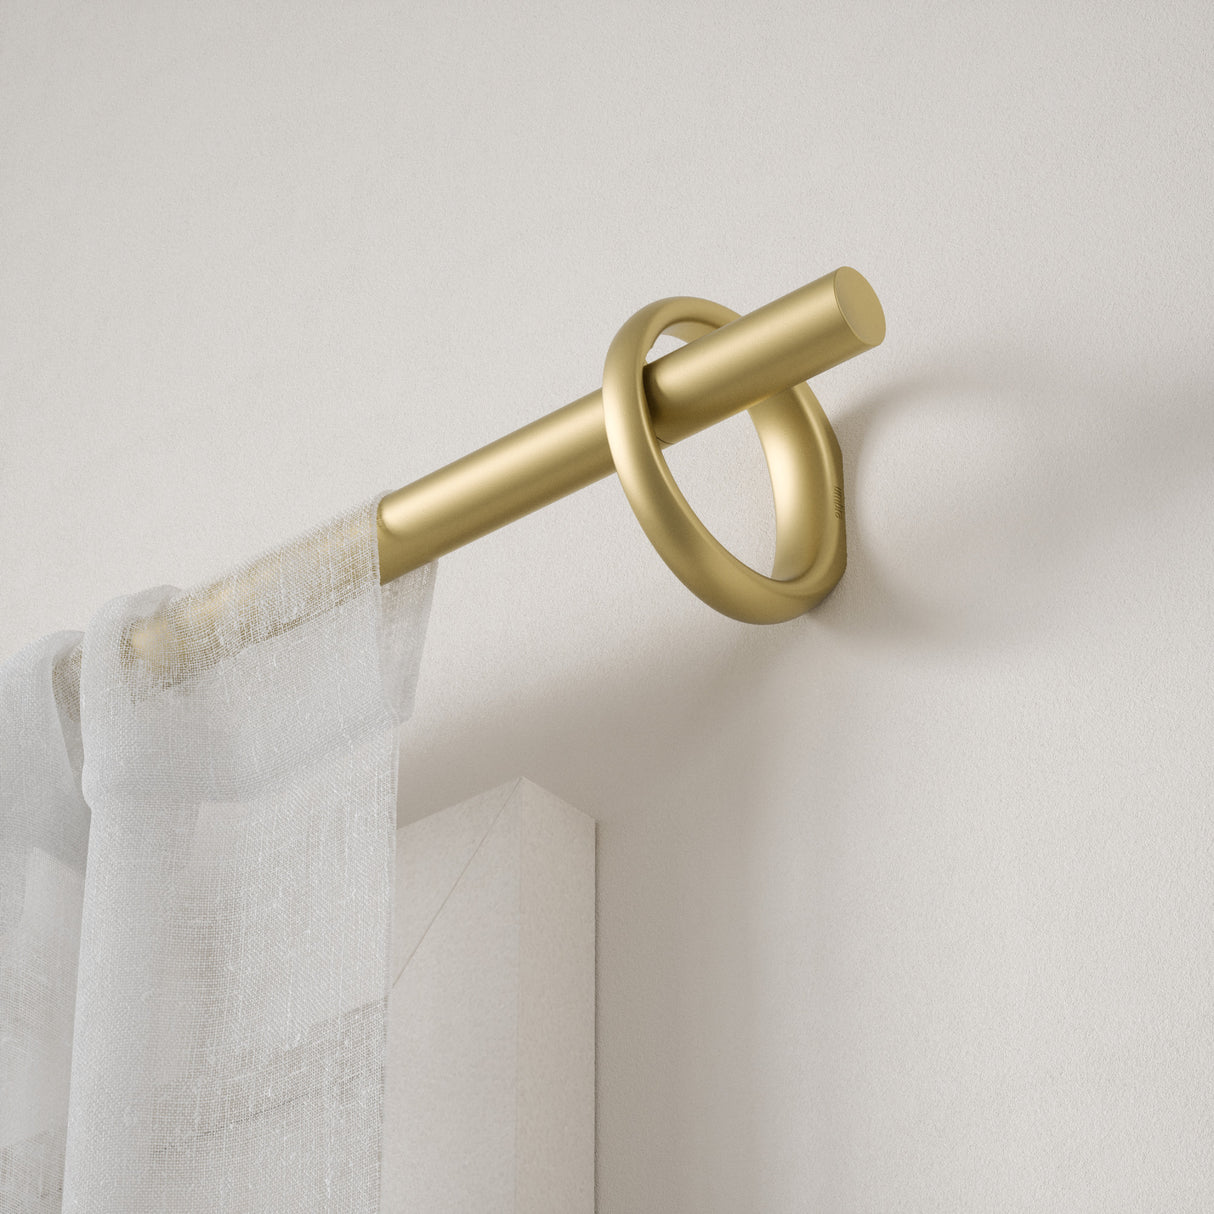 Single Curtain Rods | color: Gold | size: 42-120" (107-305 cm) | diameter: 1" (2.5 cm) | Hover